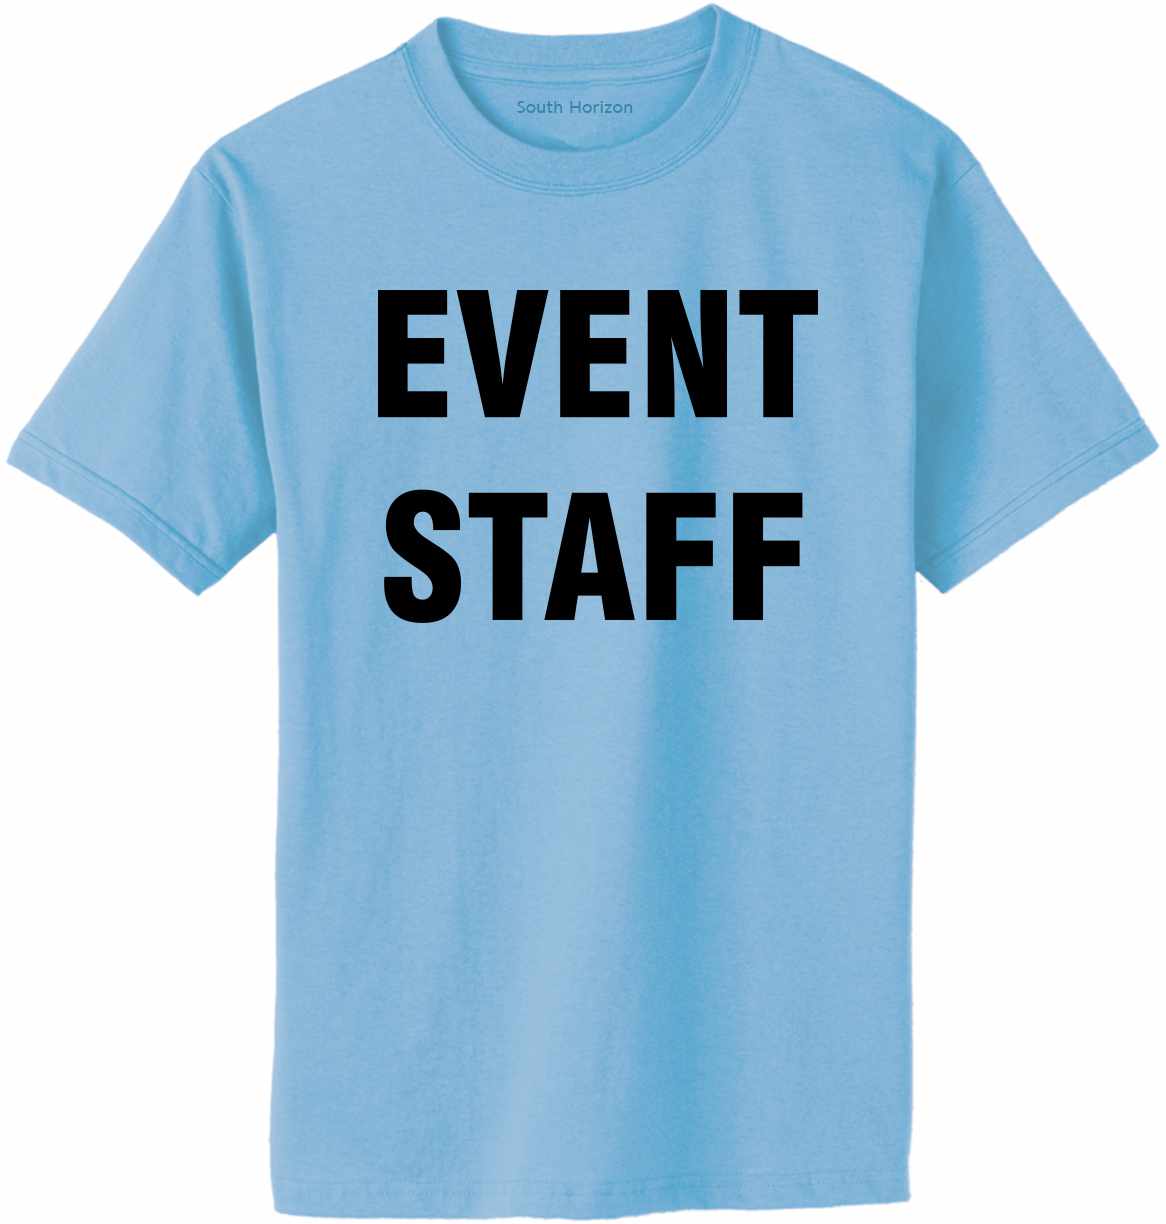 EVENT STAFF Adult T-Shirt (#399-1)